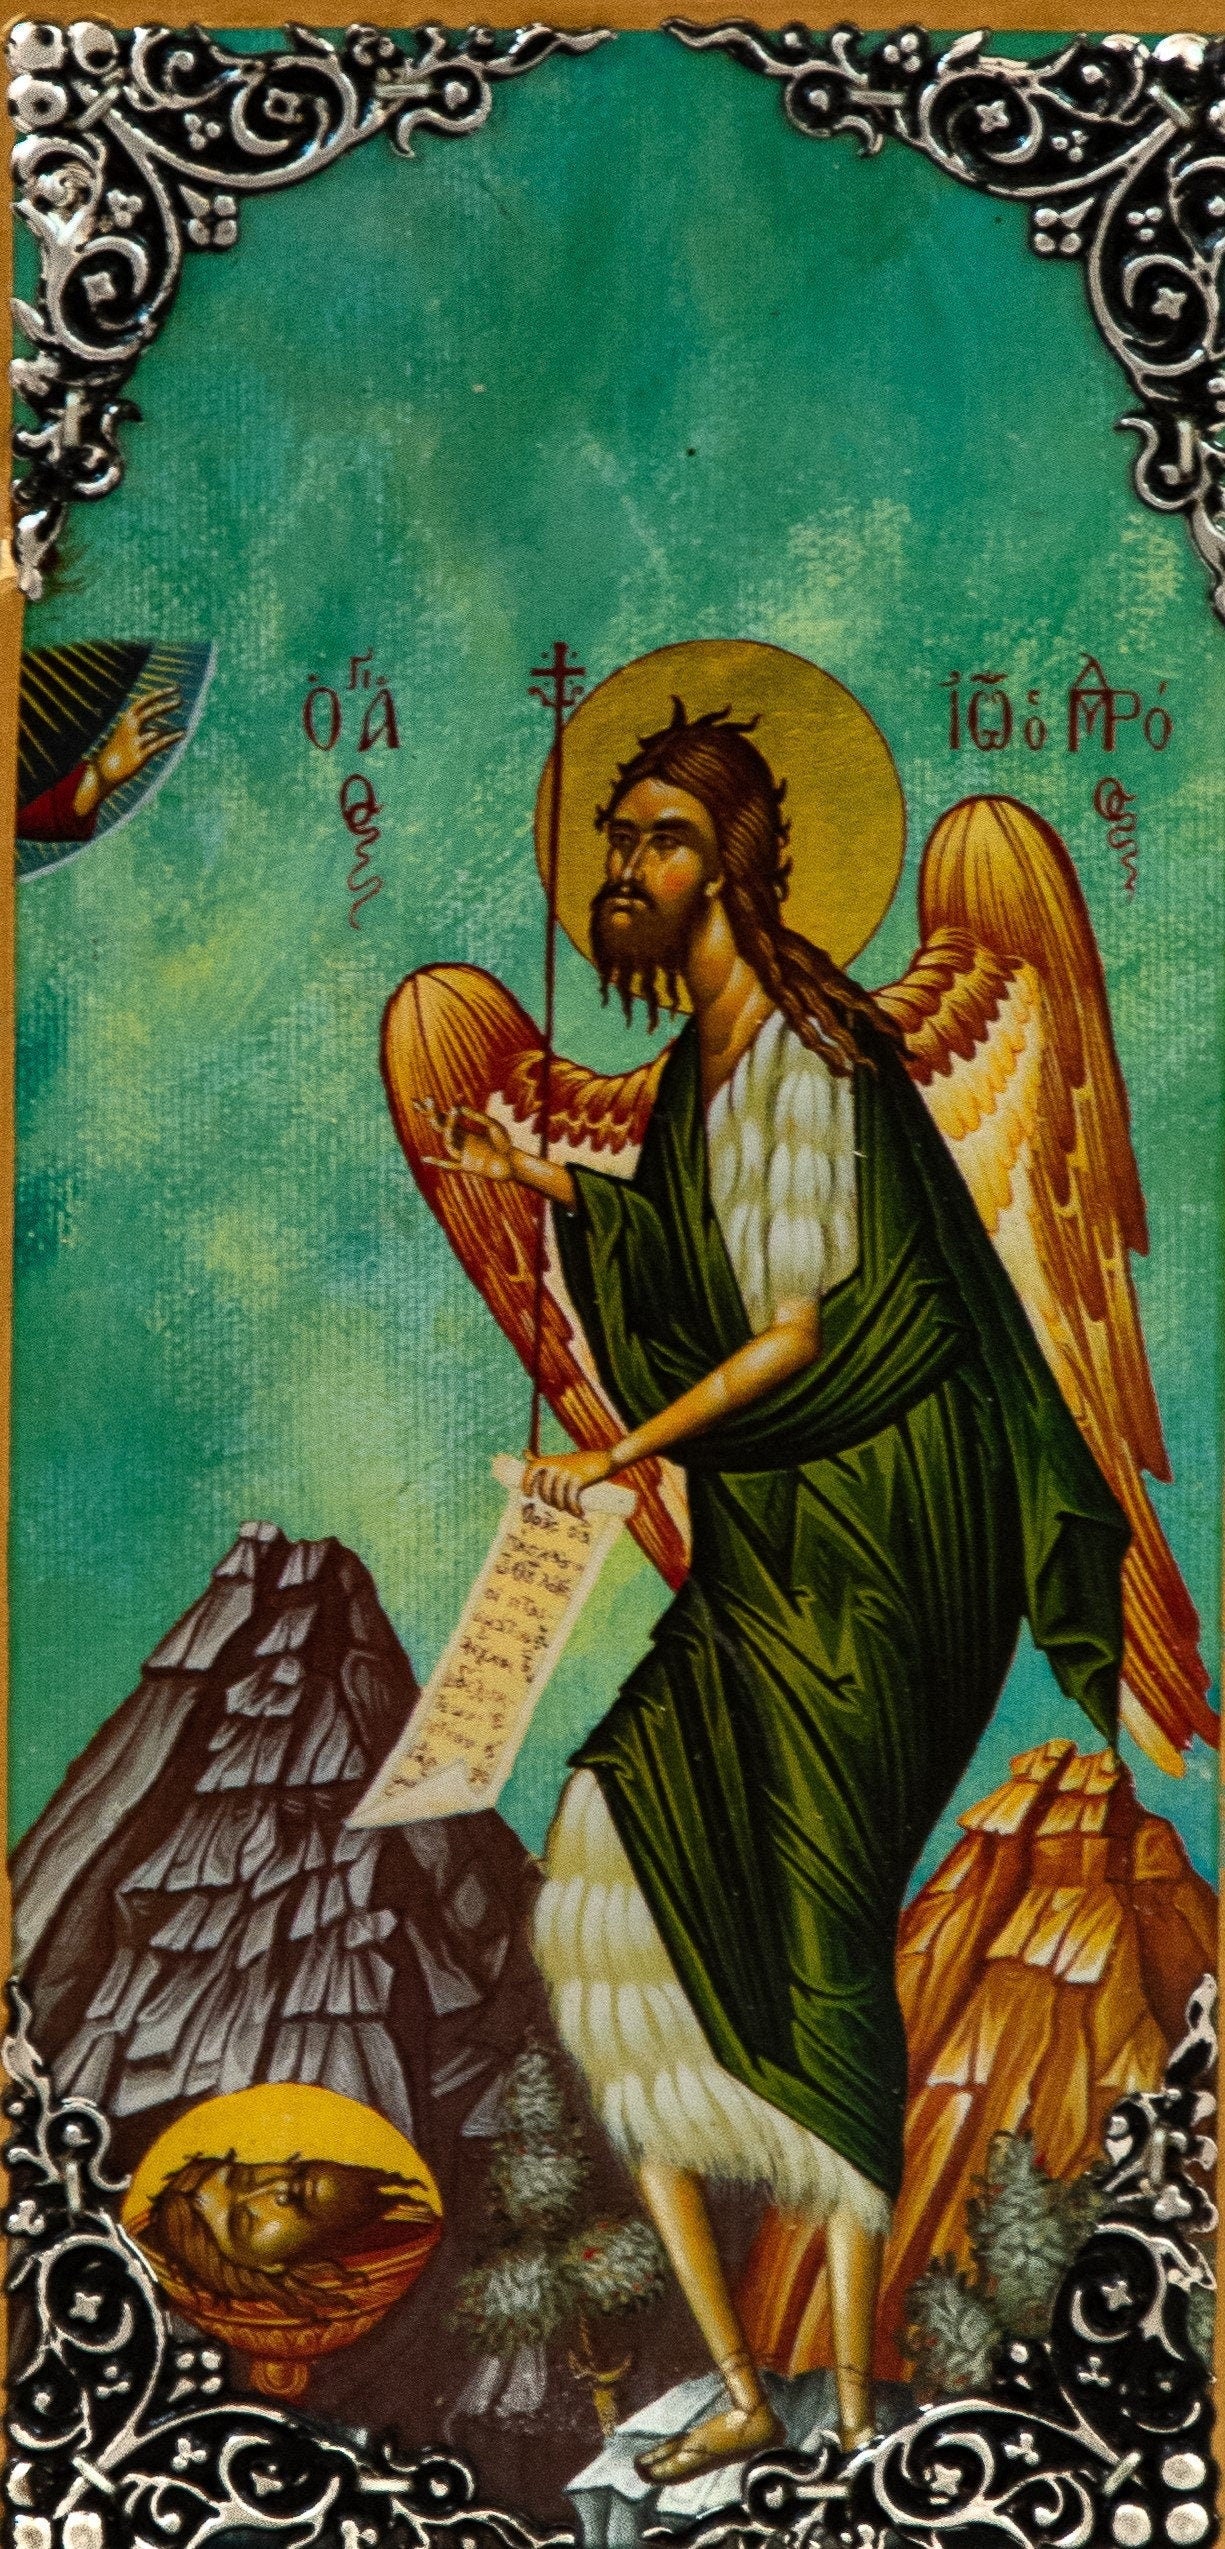 Saint John icon the Forerunner, Handmade Greek Orthodox icon of Saint John Baptist, Byzantine art wall hanging wood plaque, religious decor TheHolyArt